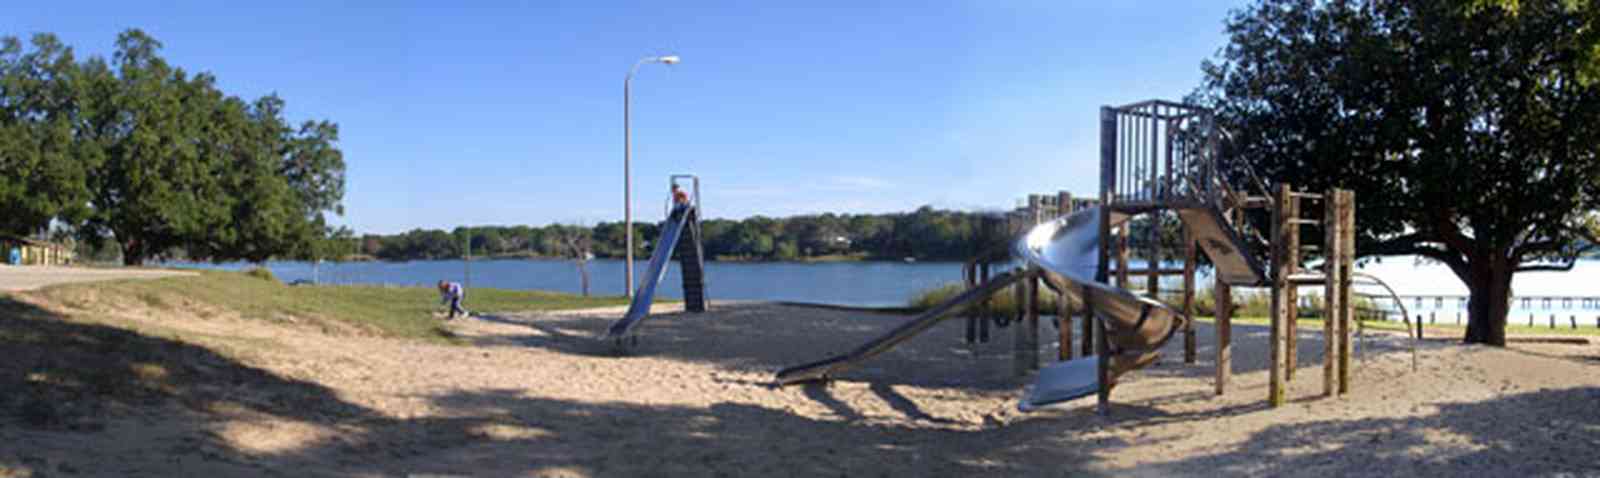 East-Hill:-Bayview-Park_03a.jpg:  slide, swing, playground equipment, bayou texar, magnolia tree, sand lot, play area